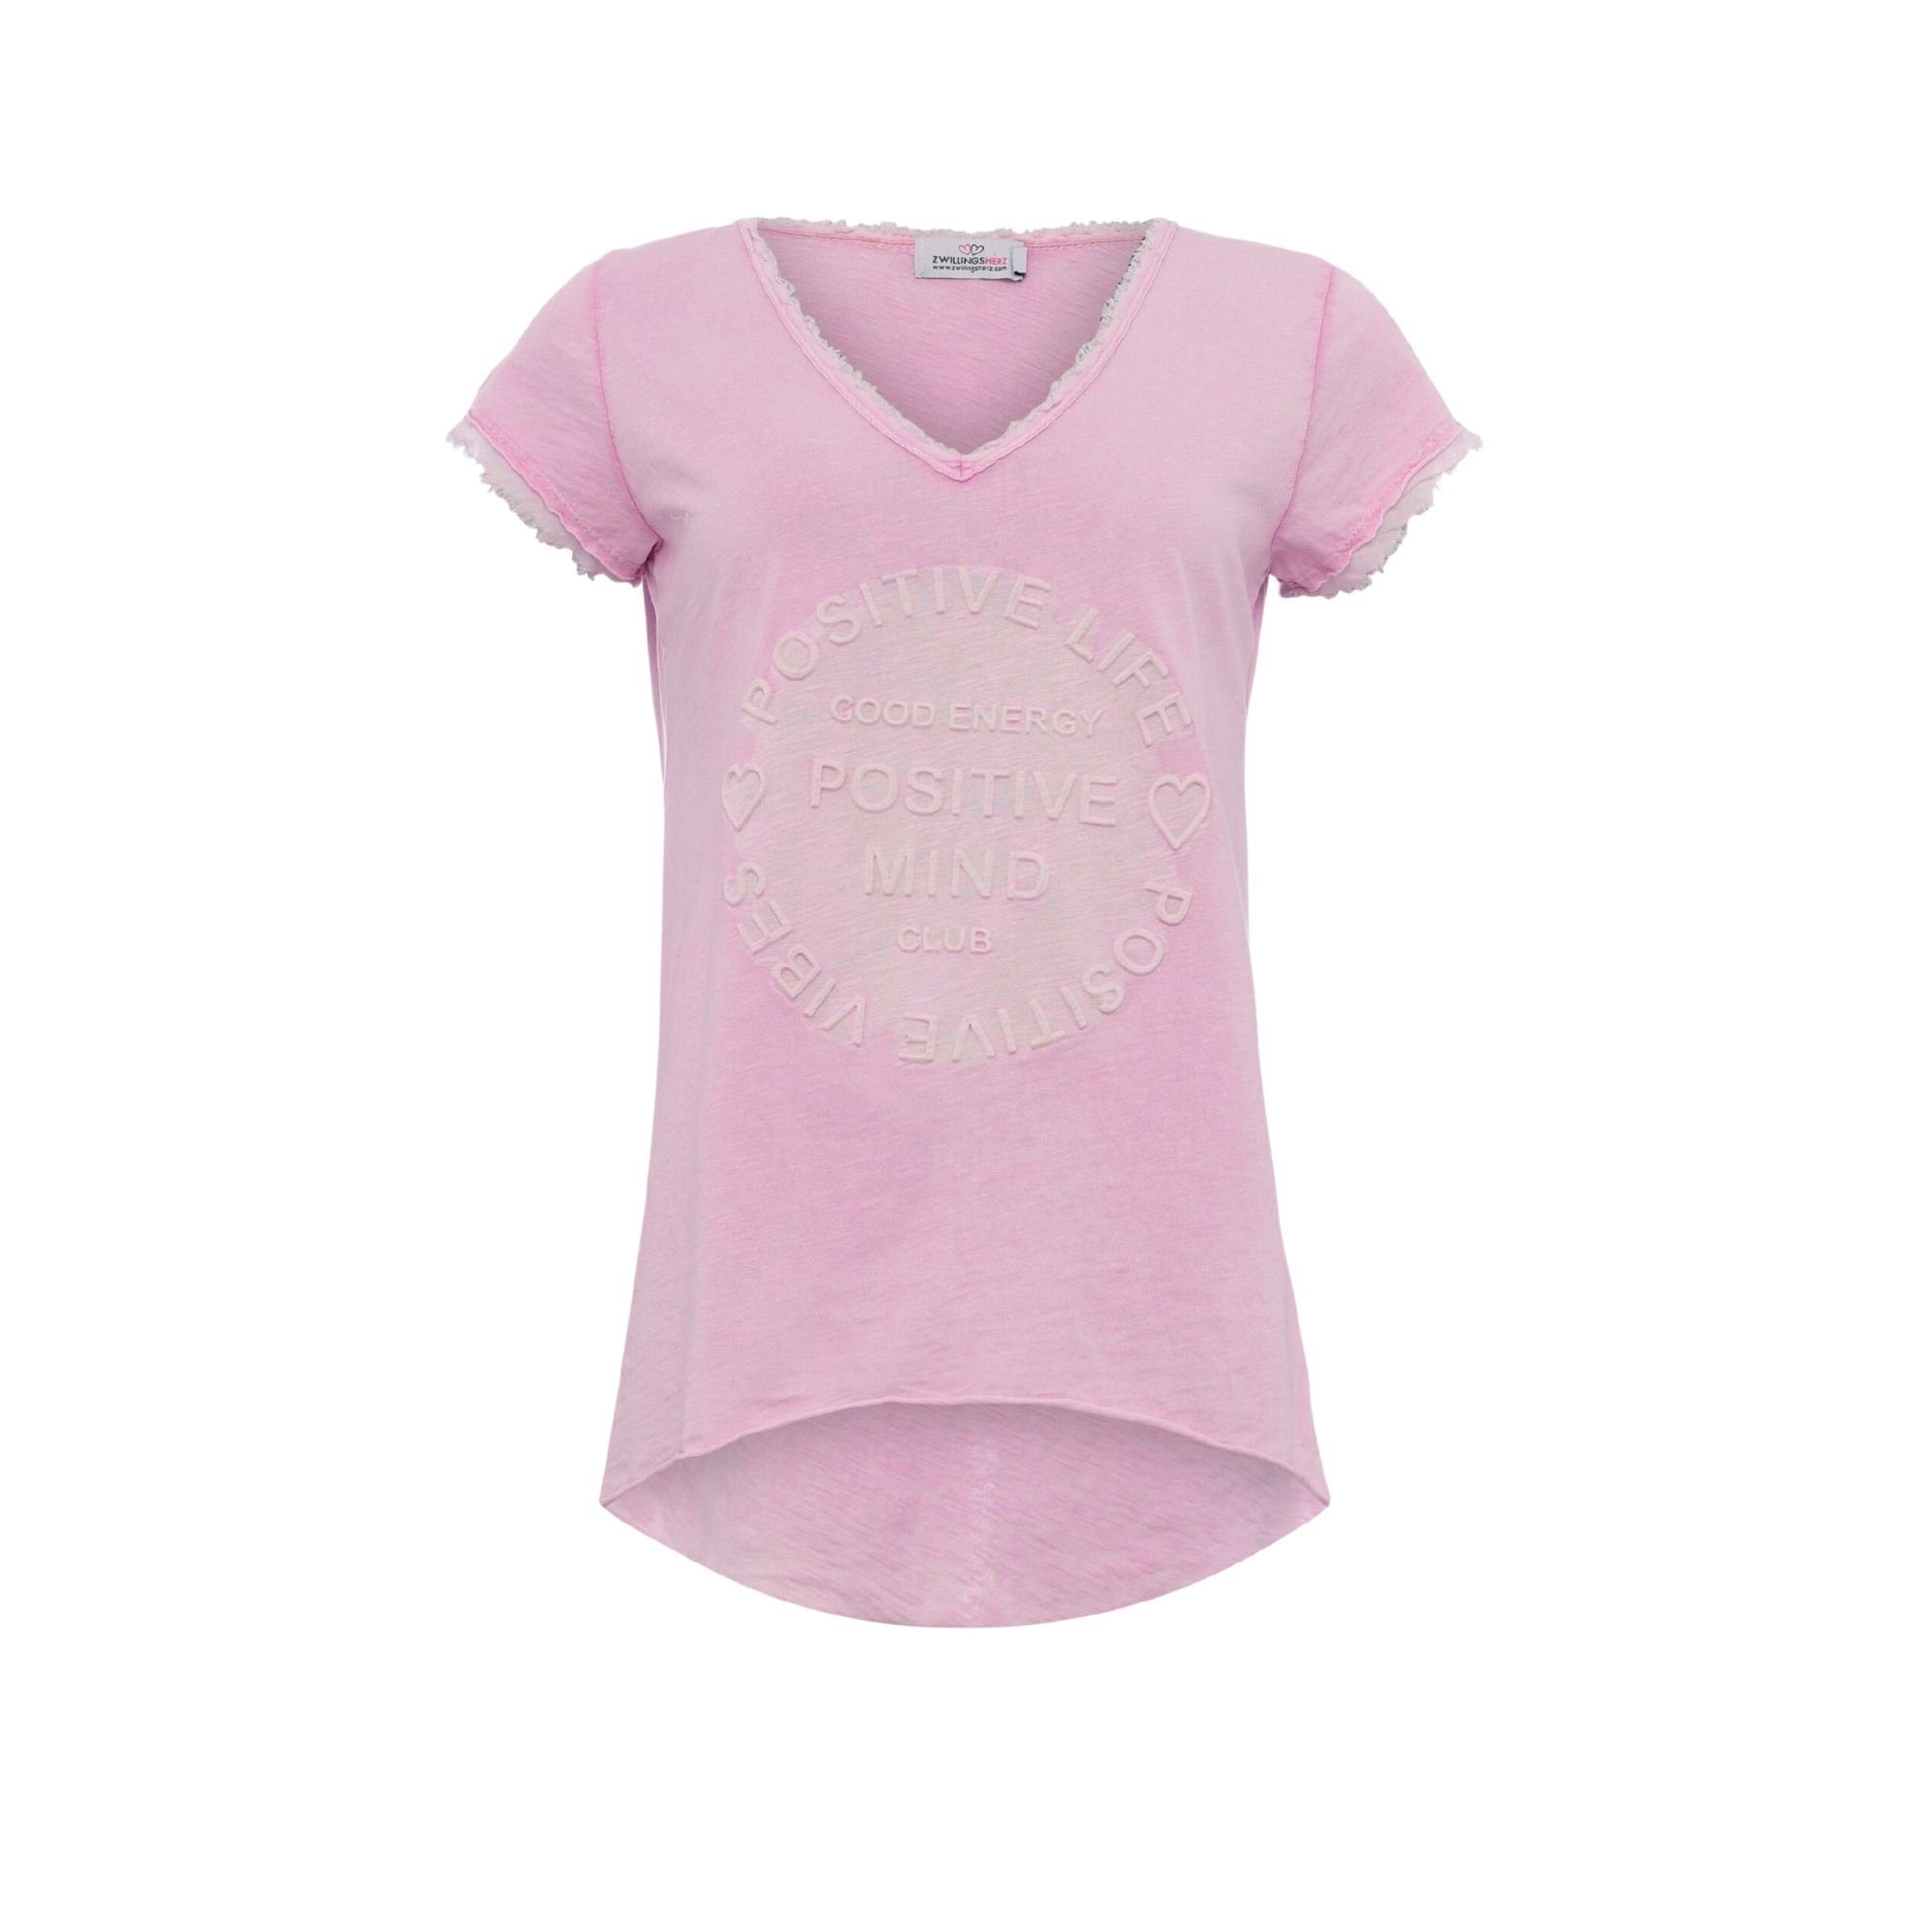 Zwillingsherz T-Shirt Damen T-Shirt Tail in blau, flieder oder rosa  Aufdruck Positive Life | T-Shirts